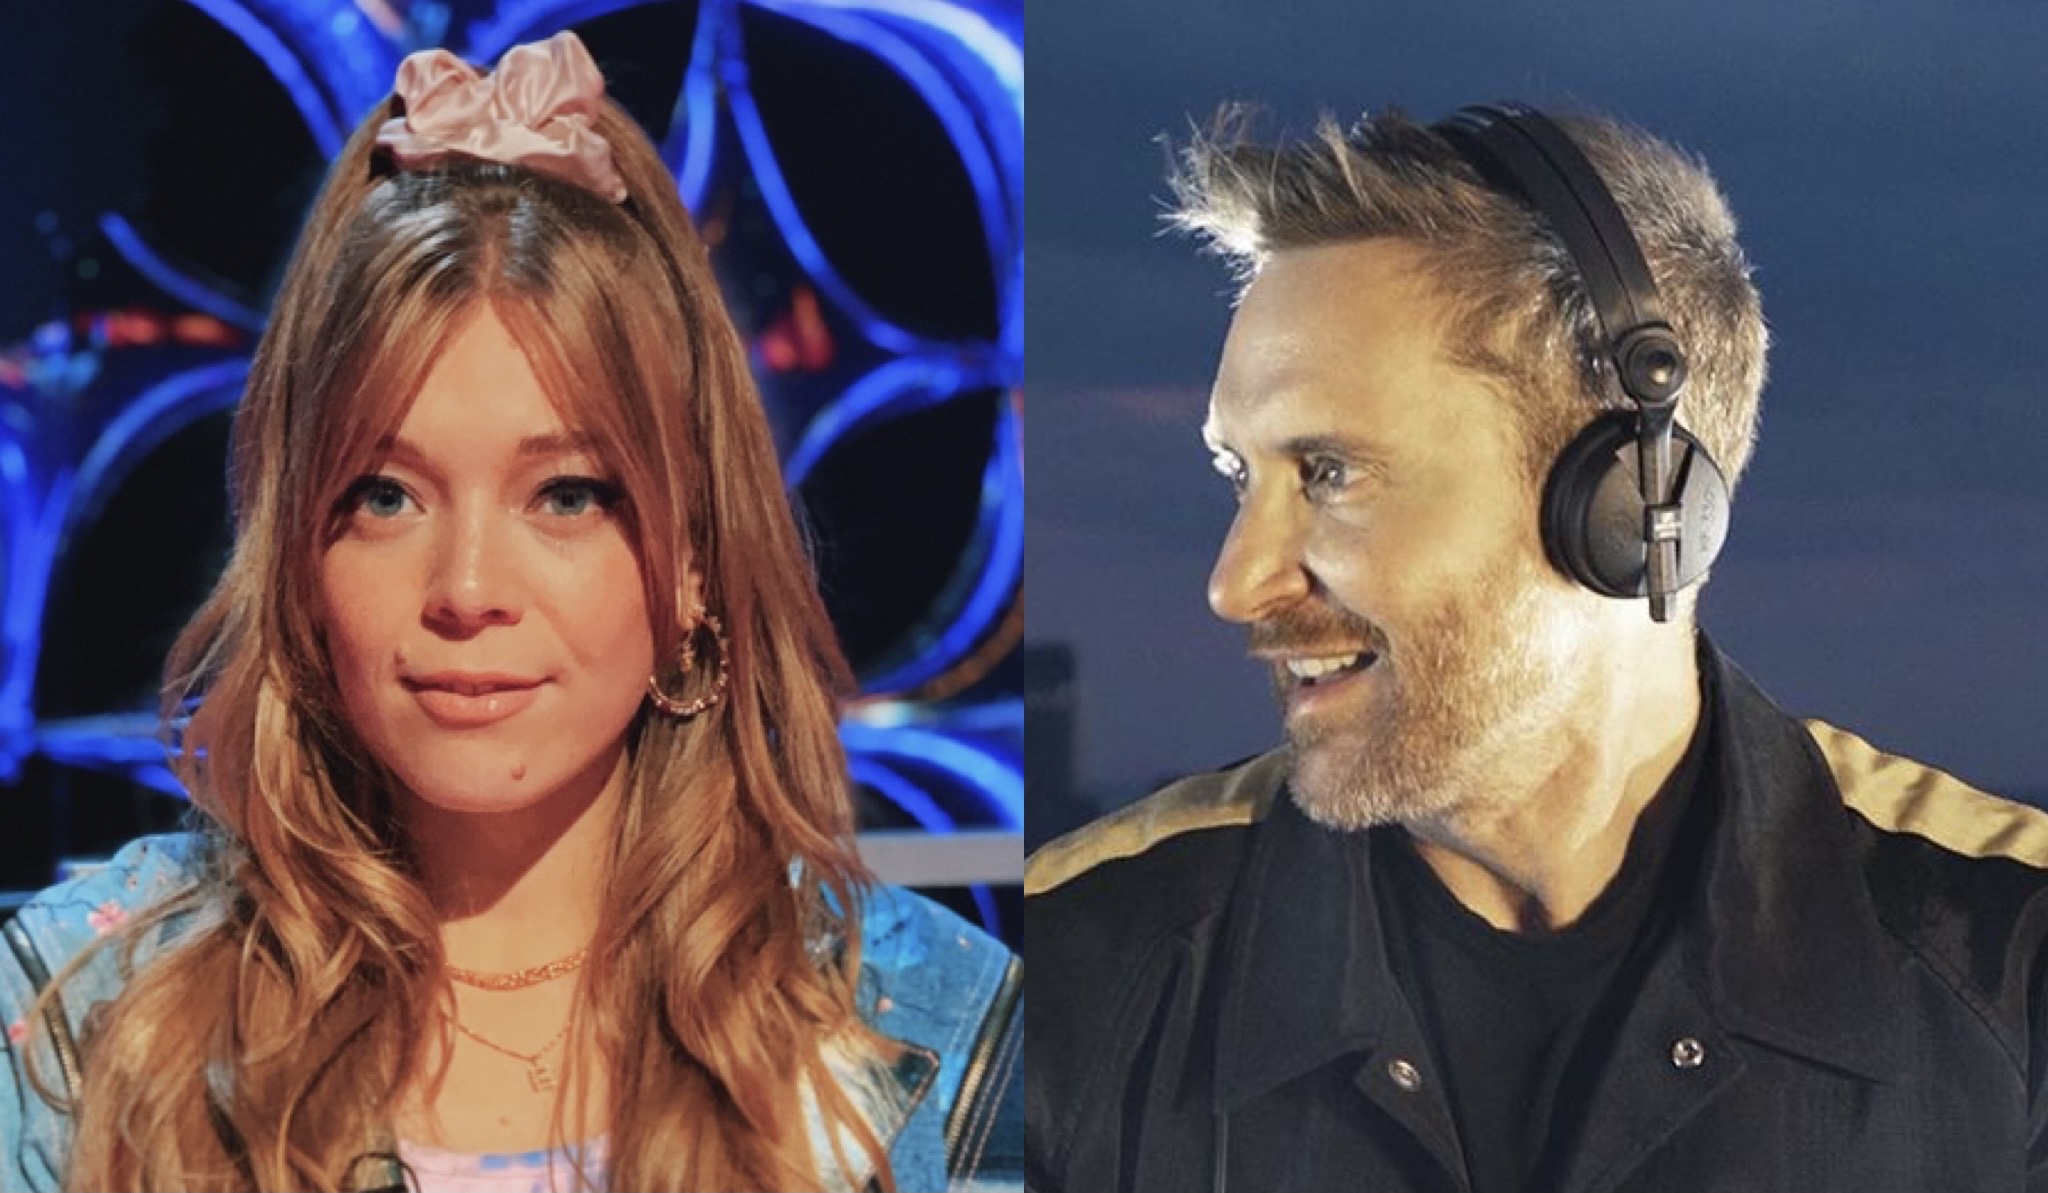 “Remember”: Becky Hill e David Guetta lançam EP de remixes da música